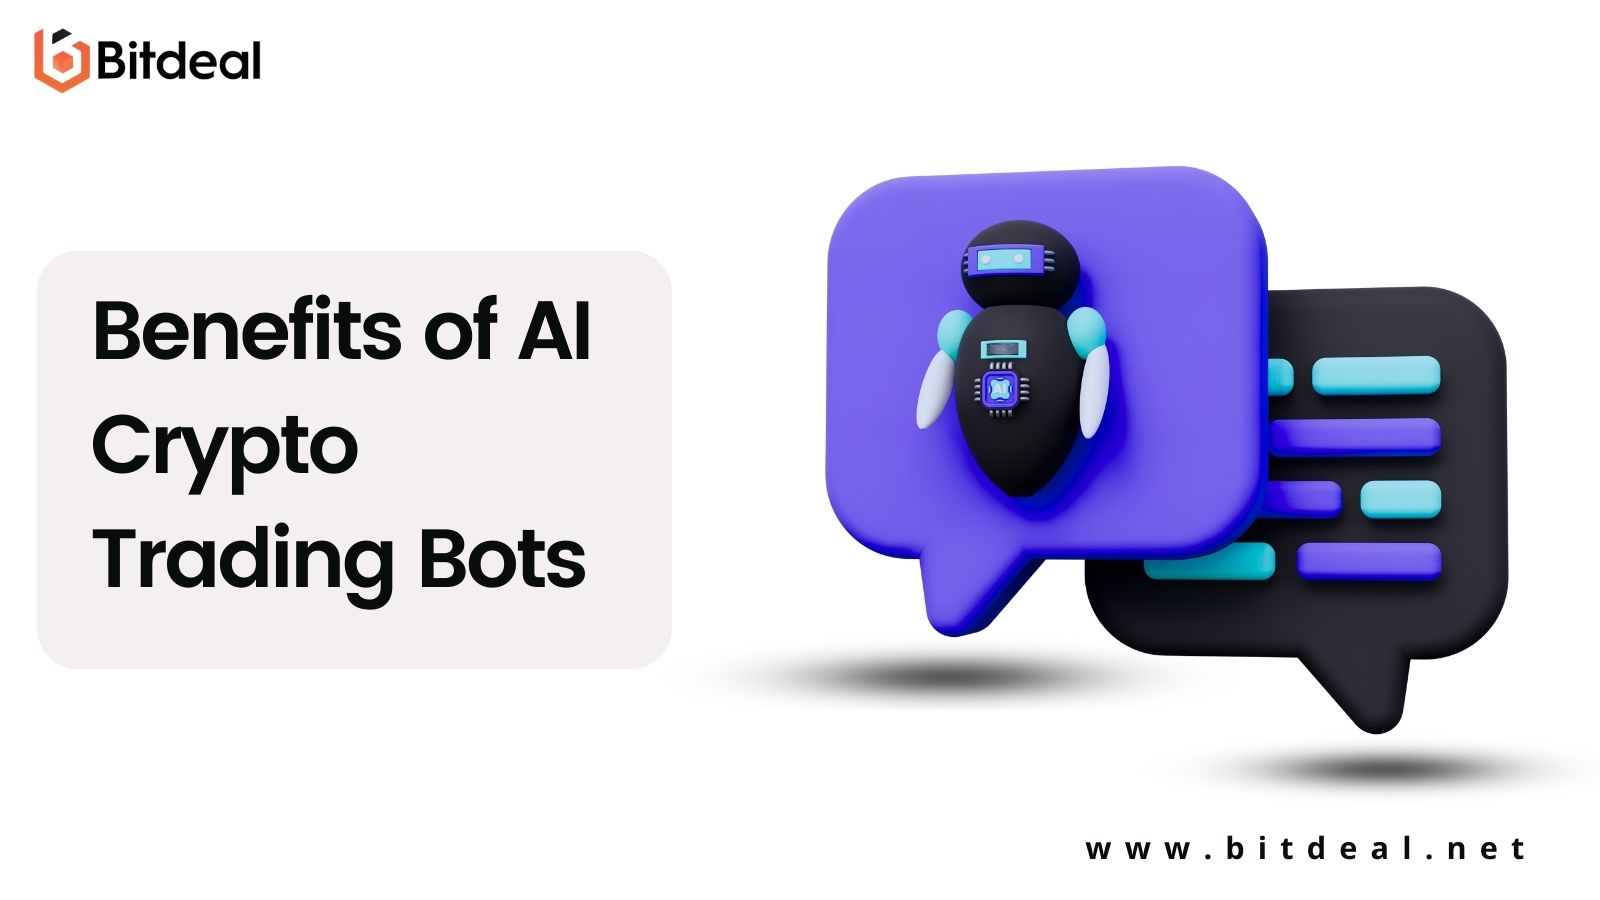 Benefits of AI Crypto Trading Bots